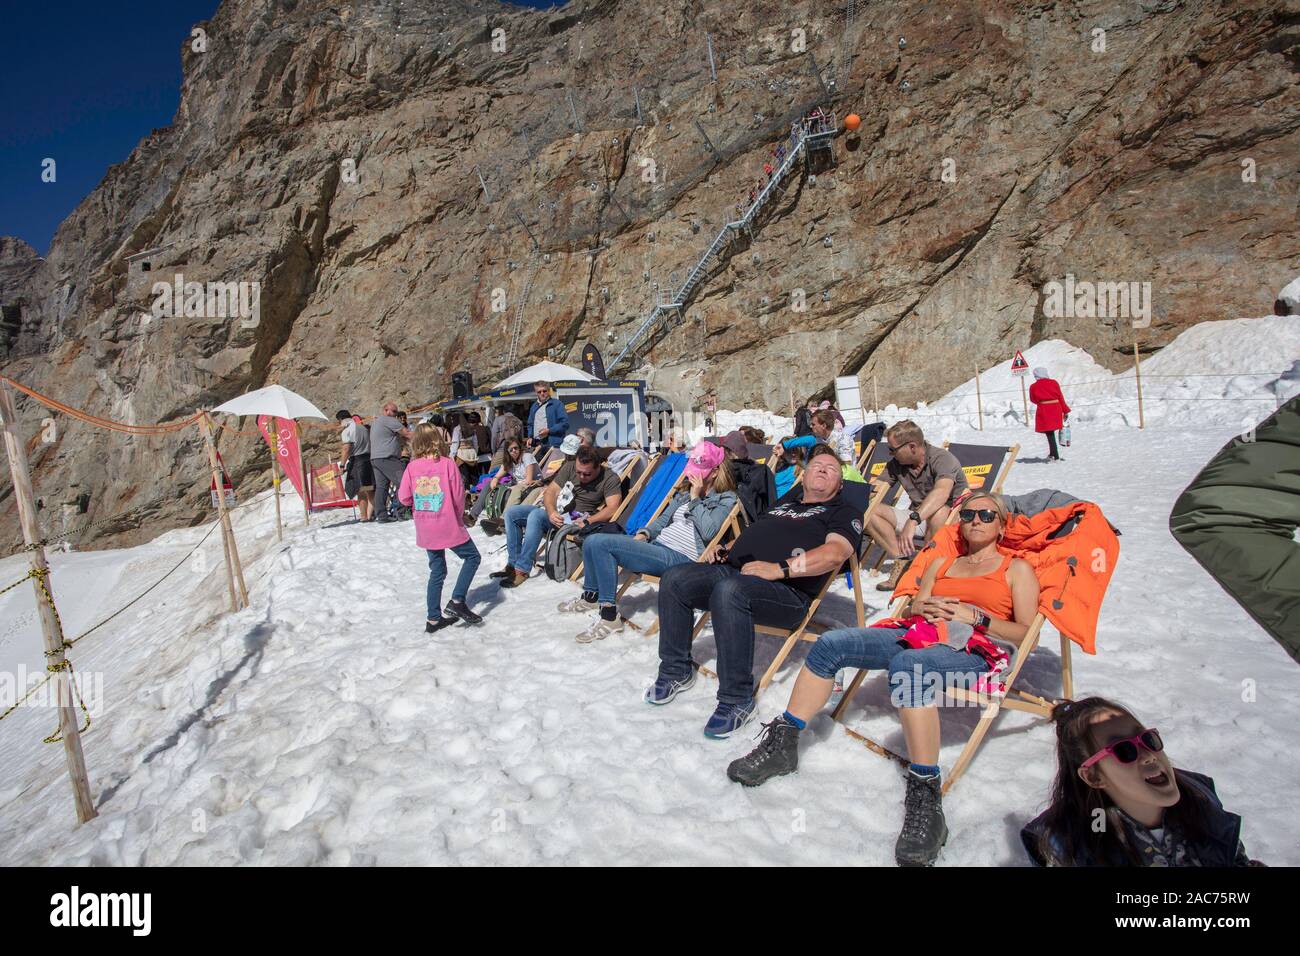 People enjoy the sun on the fun park at Jungfraudjoch, Switzerland Stock Photo